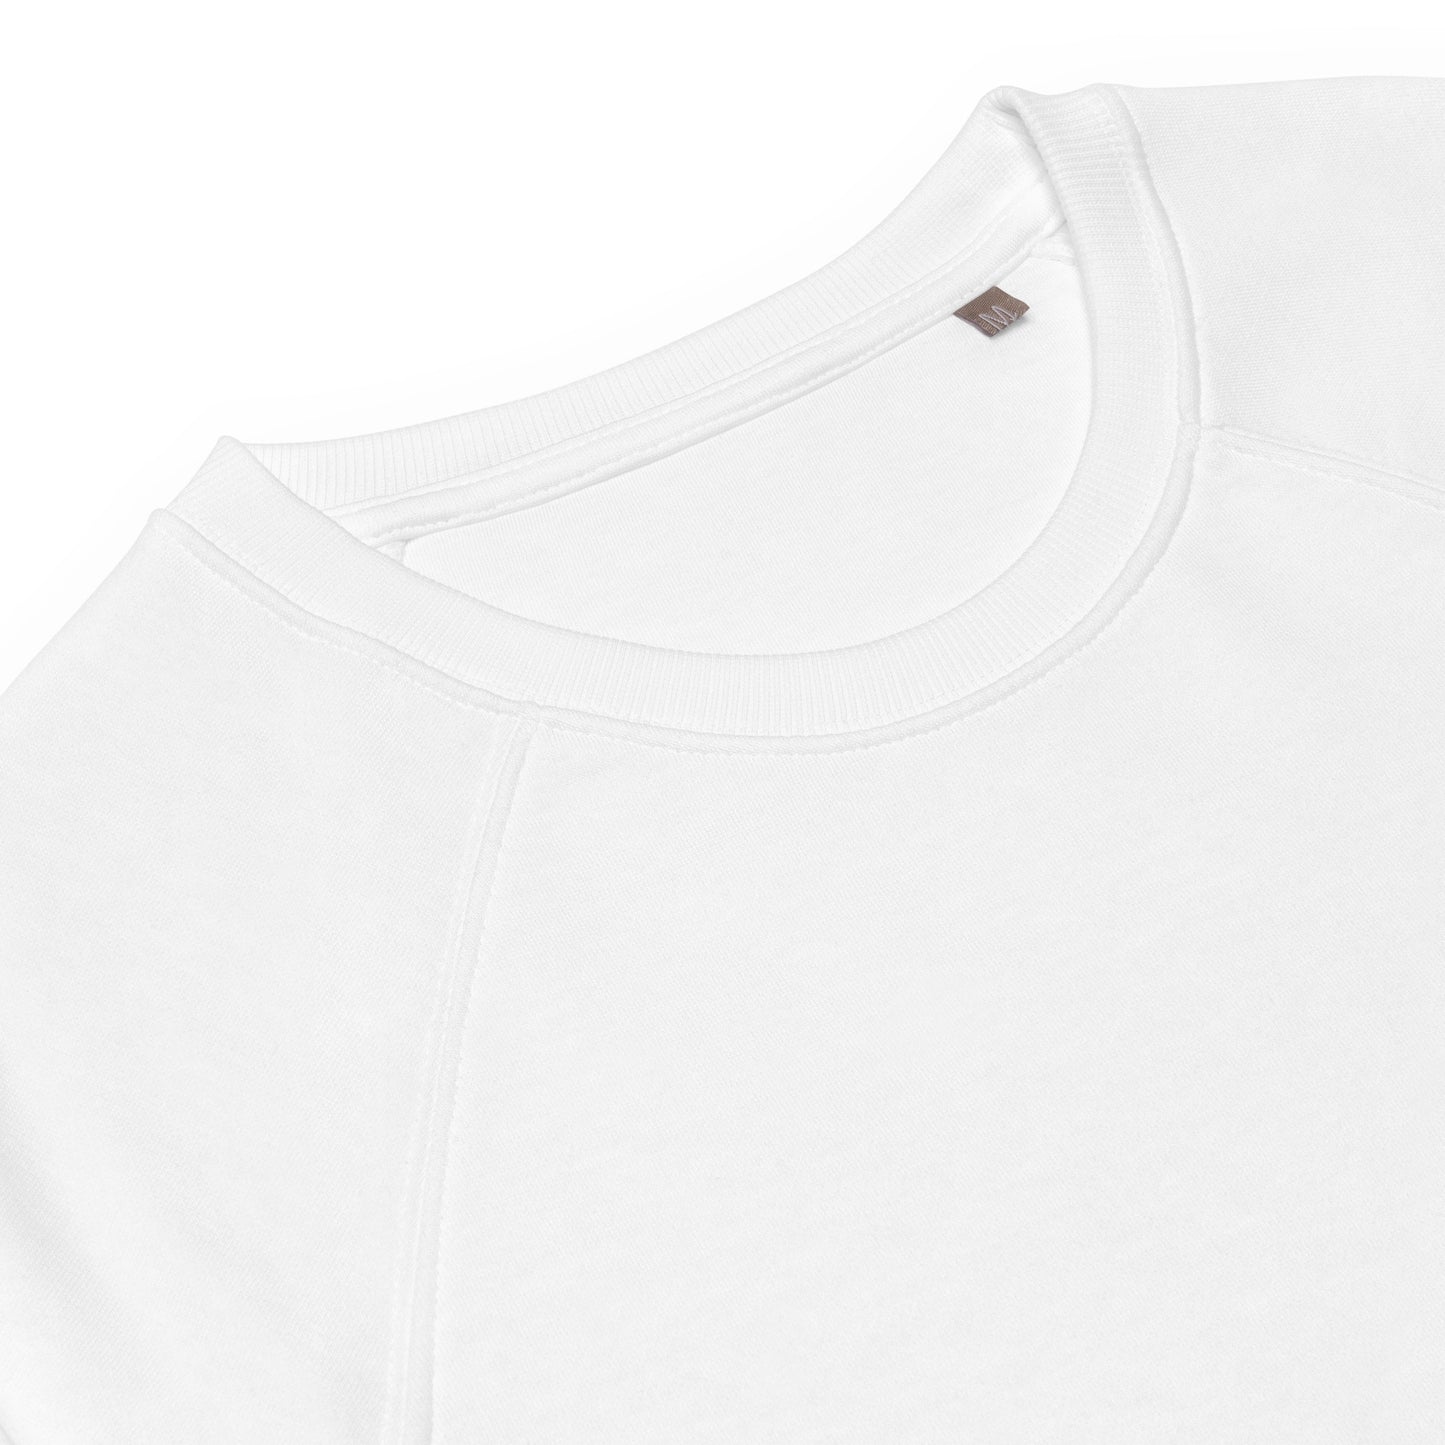 #ffffff Embroidered Unisex organic raglan sweatshirt